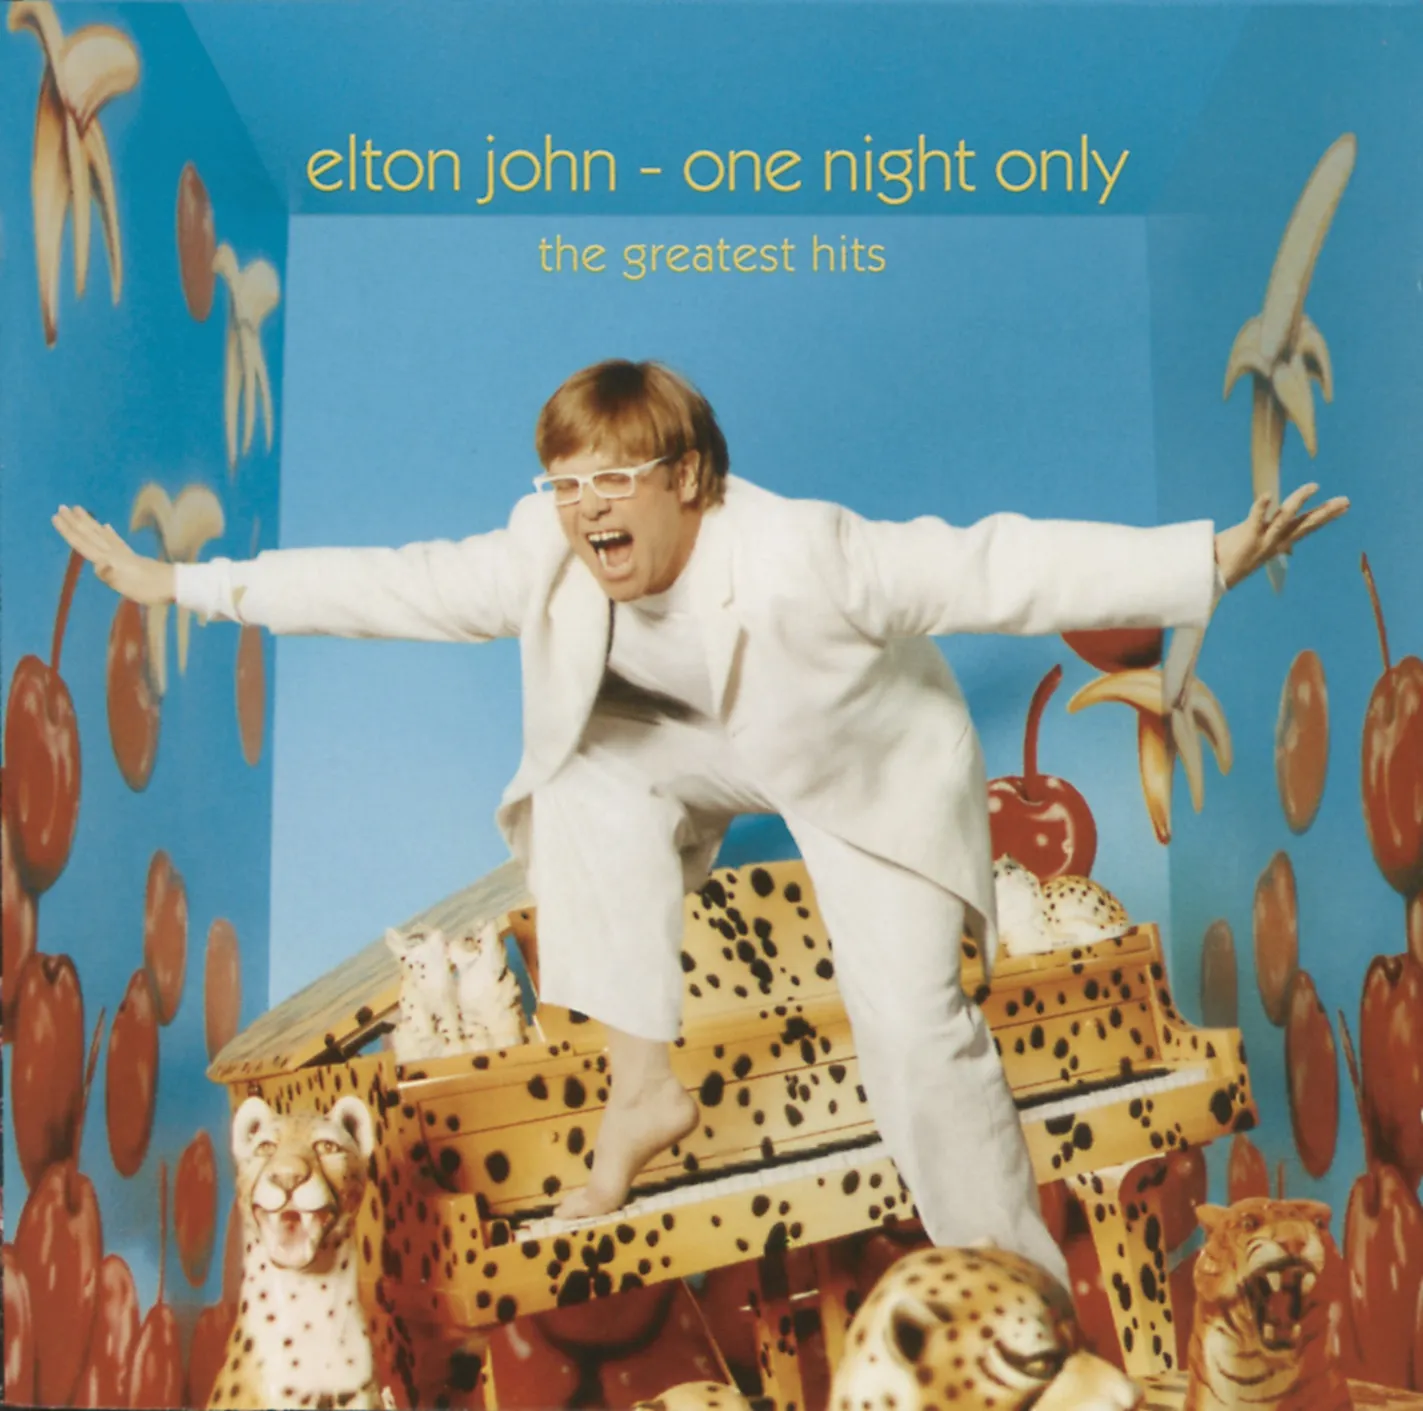 Elton John - One Night Only - The Greatest Hits artwork